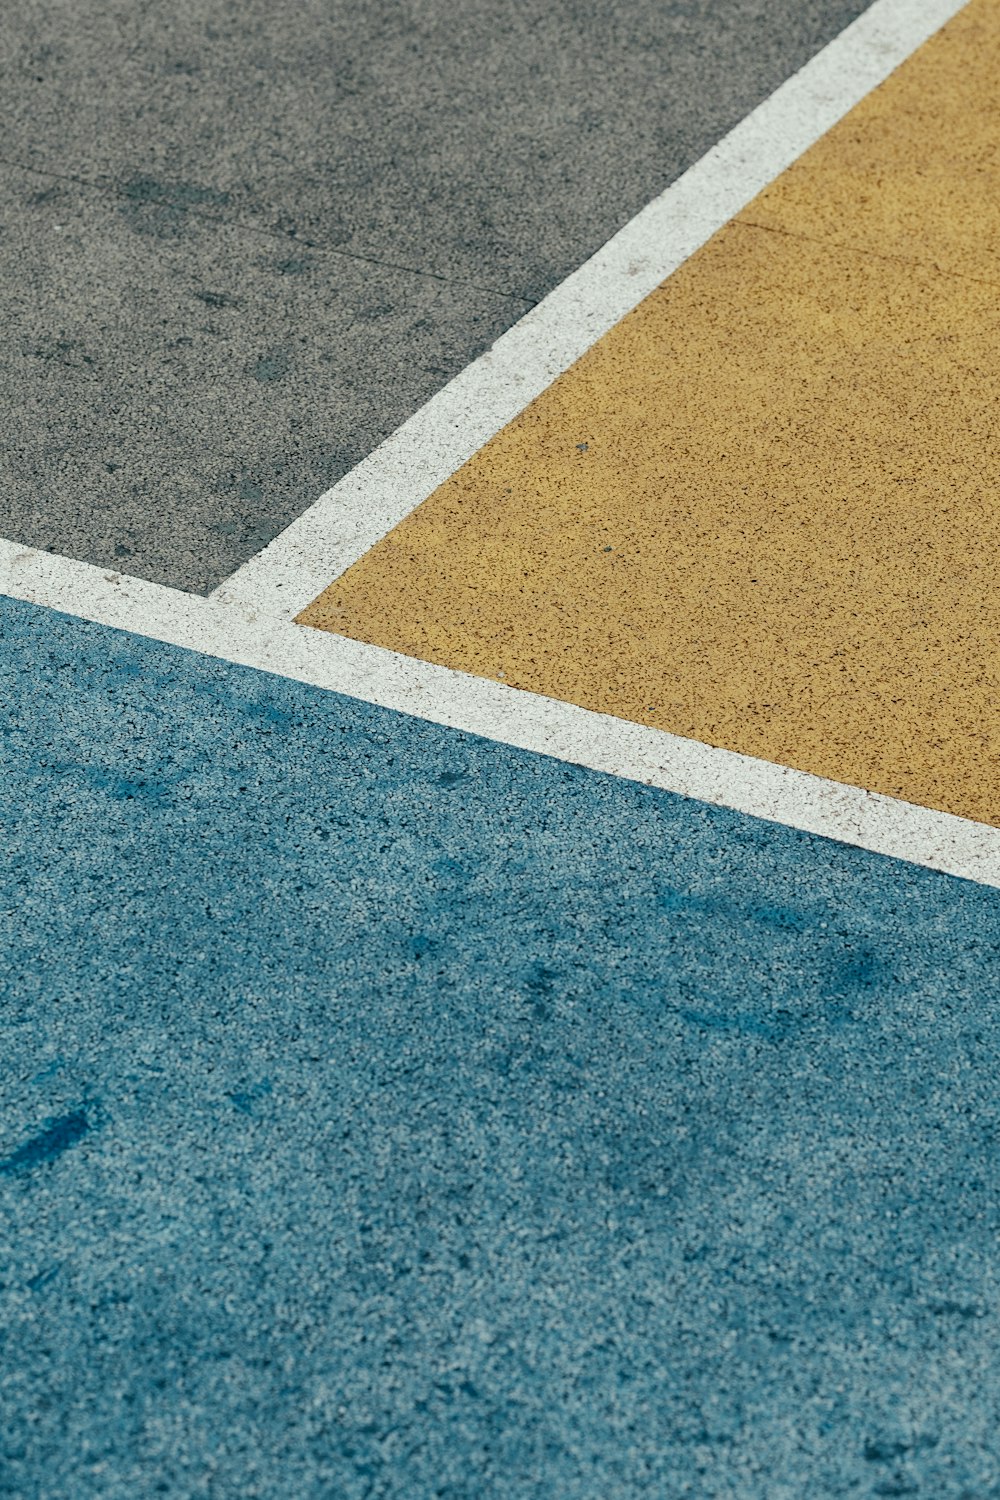 Primer plano pavimento pintado de gris, amarillo y azul